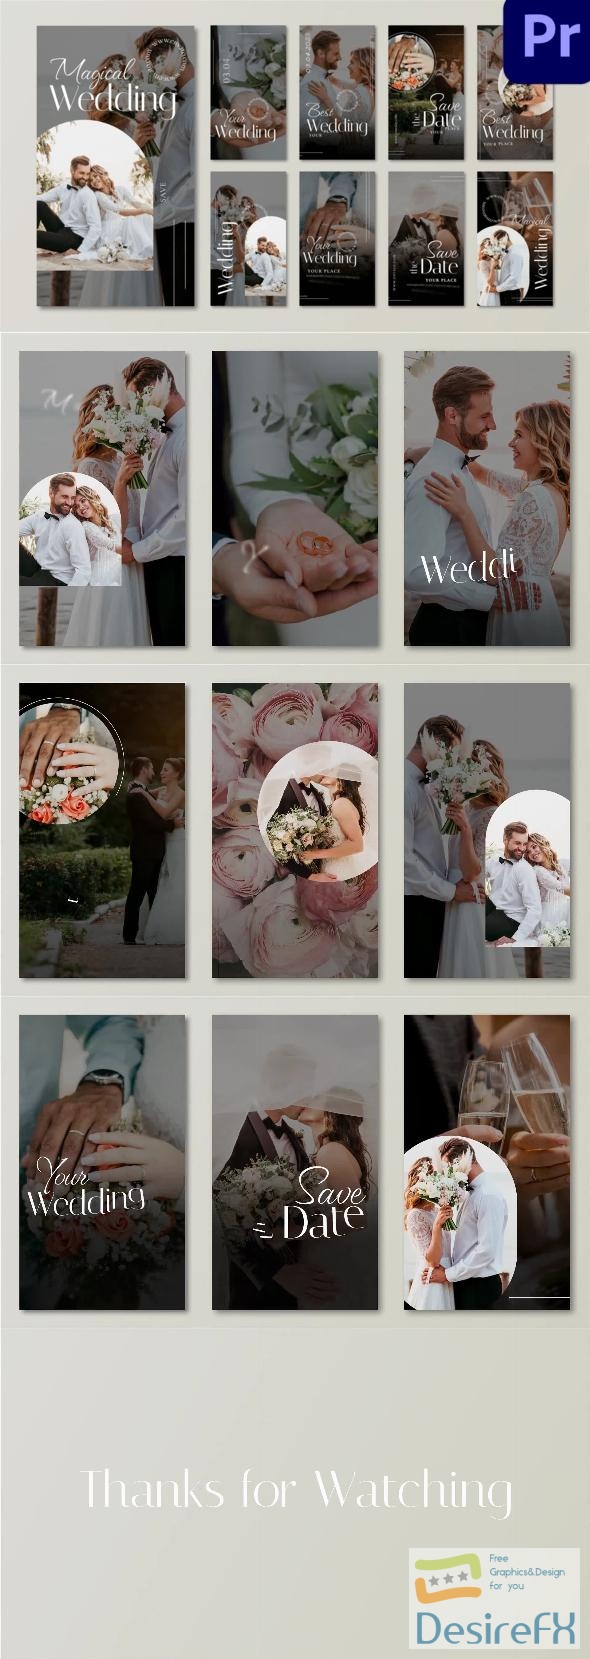 VideoHive Wedding Instagram Story 43420040